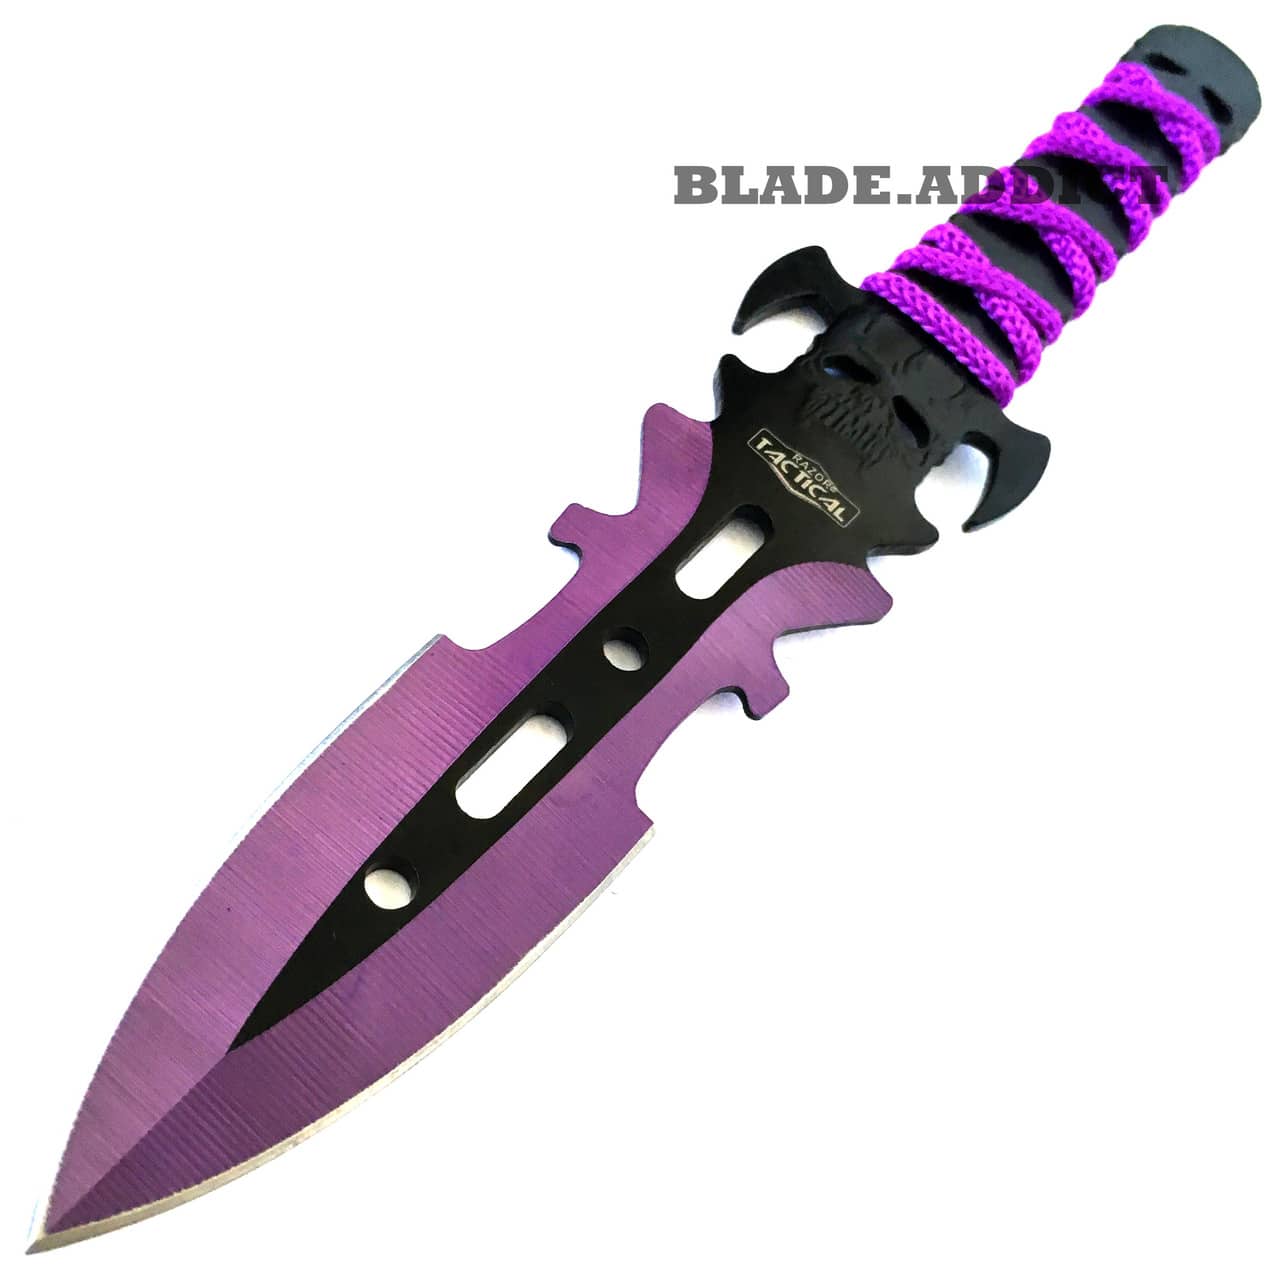 3PC Ninja Tactical Combat Naruto Kunai Throwing Knife + Sheath Purple SET